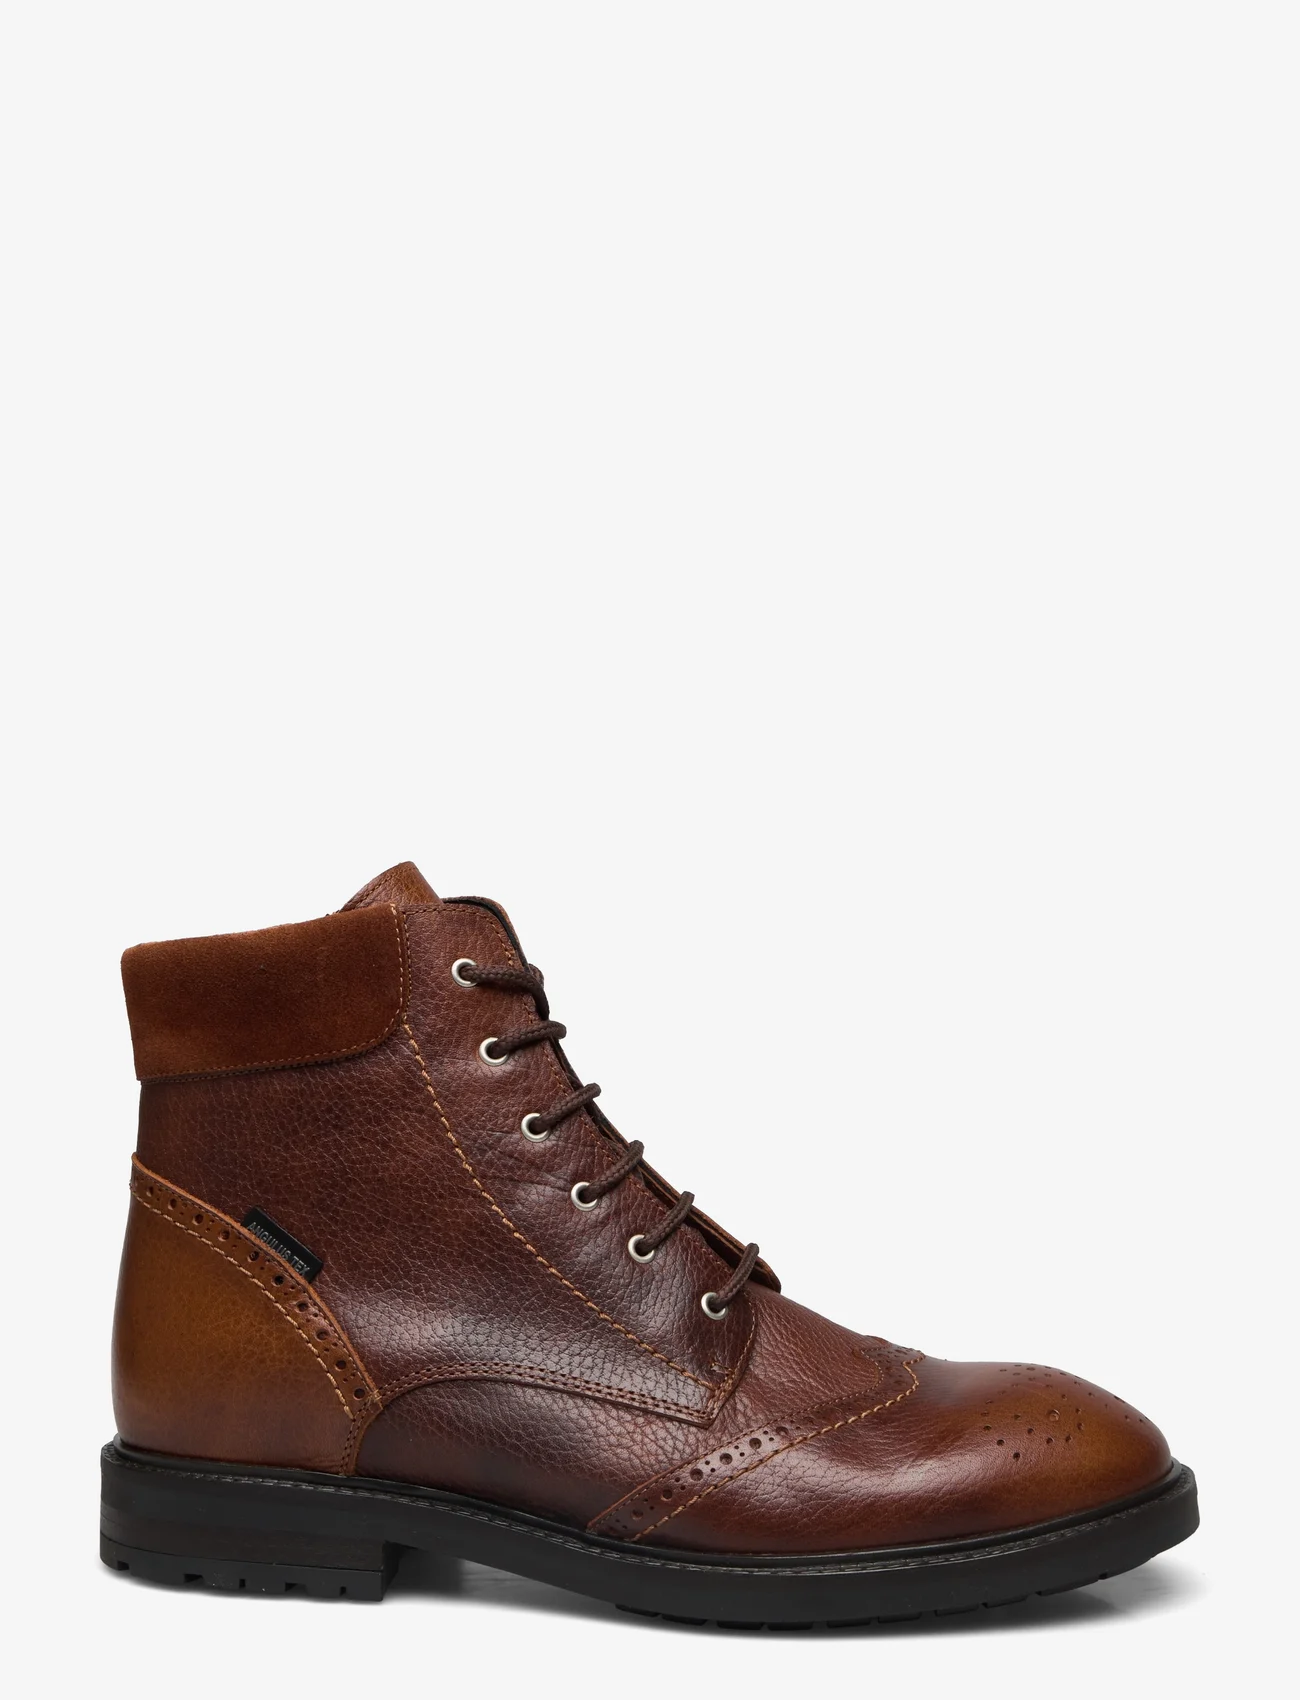 ANGULUS - Shoes - flat - with lace - ziemeļvalstu stils - 2509/1166 medium brown/cognac - 1